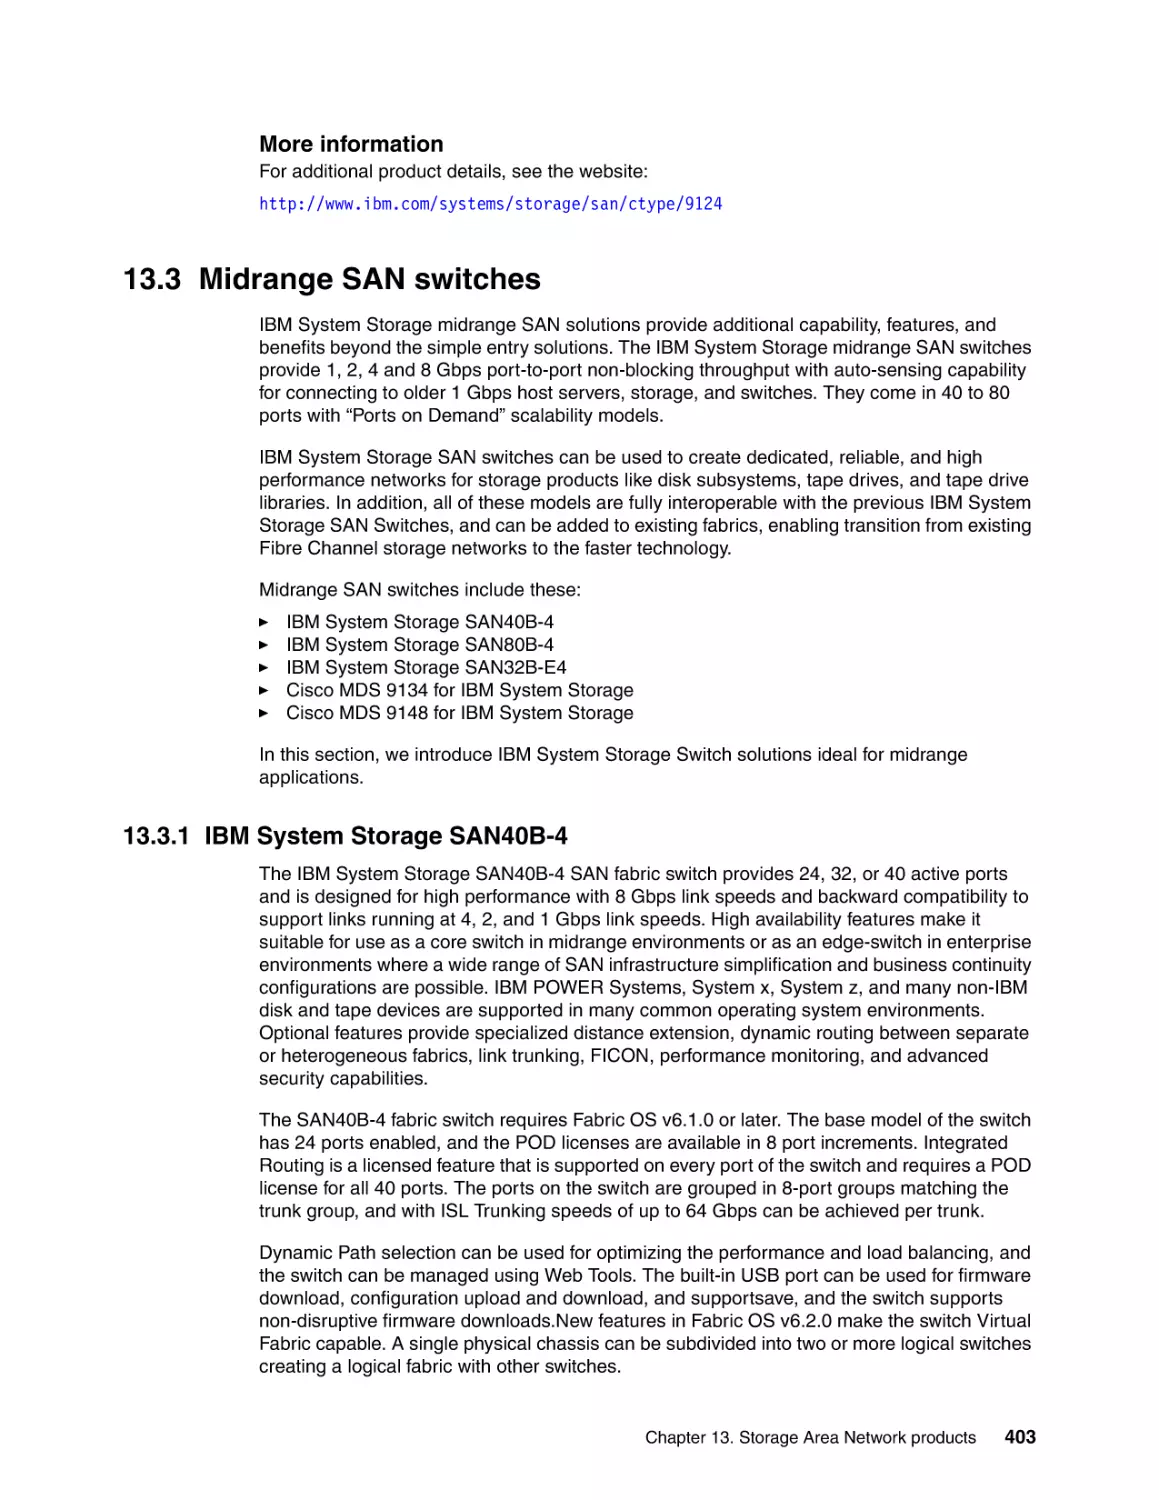 13.3 Midrange SAN switches
13.3.1 IBM System Storage SAN40B-4